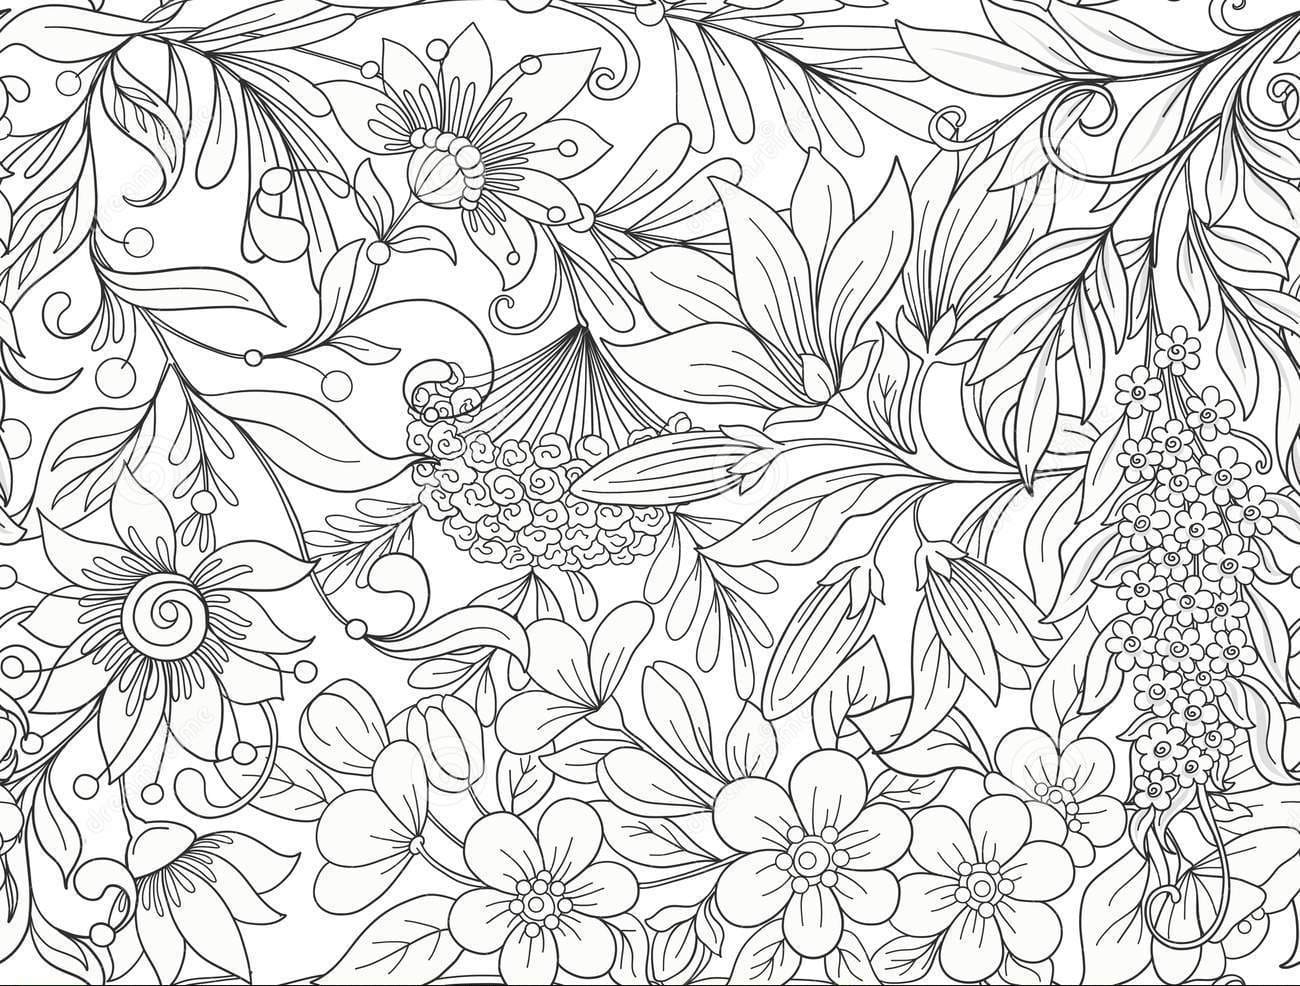 Coloring book Magnolia Free Coloring Page